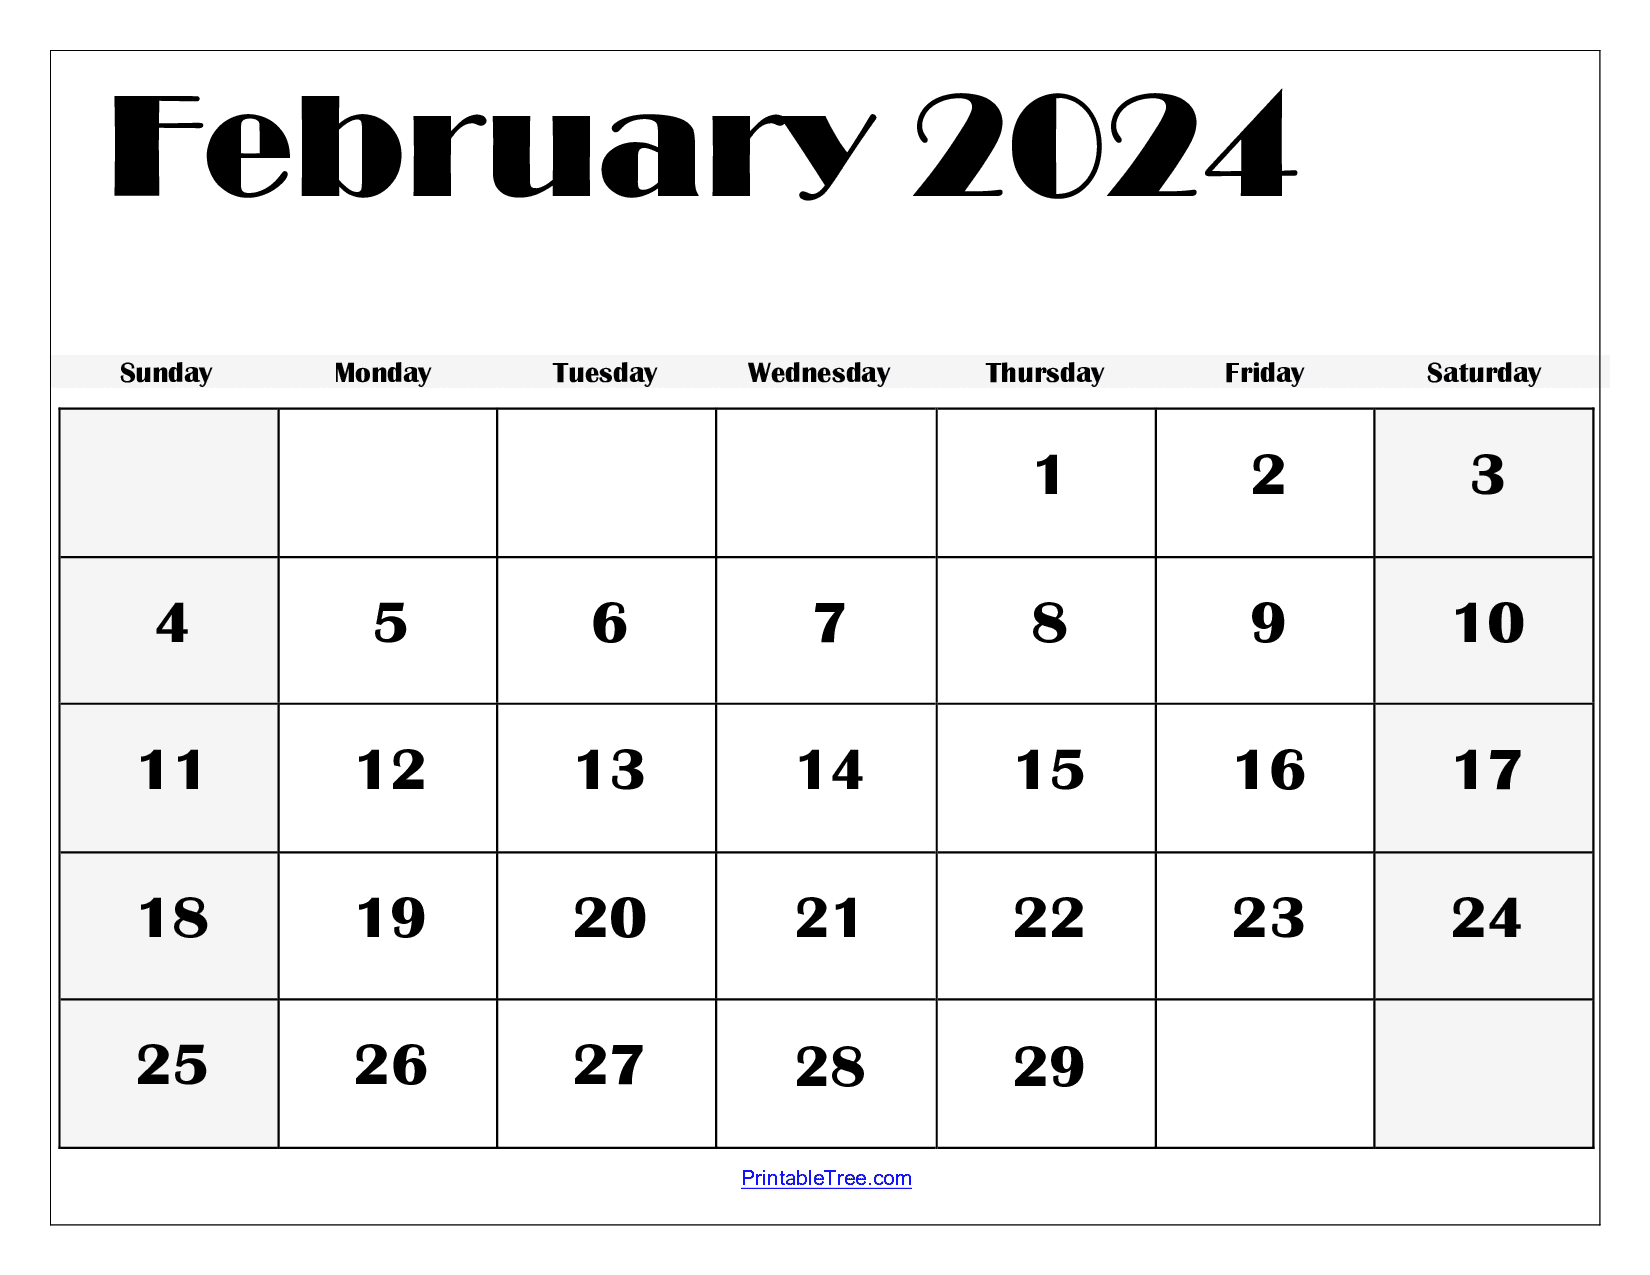 February 2024 Calendar Printable Pdf Template With Holidays for February 2024 Calendar Printable With Holidays